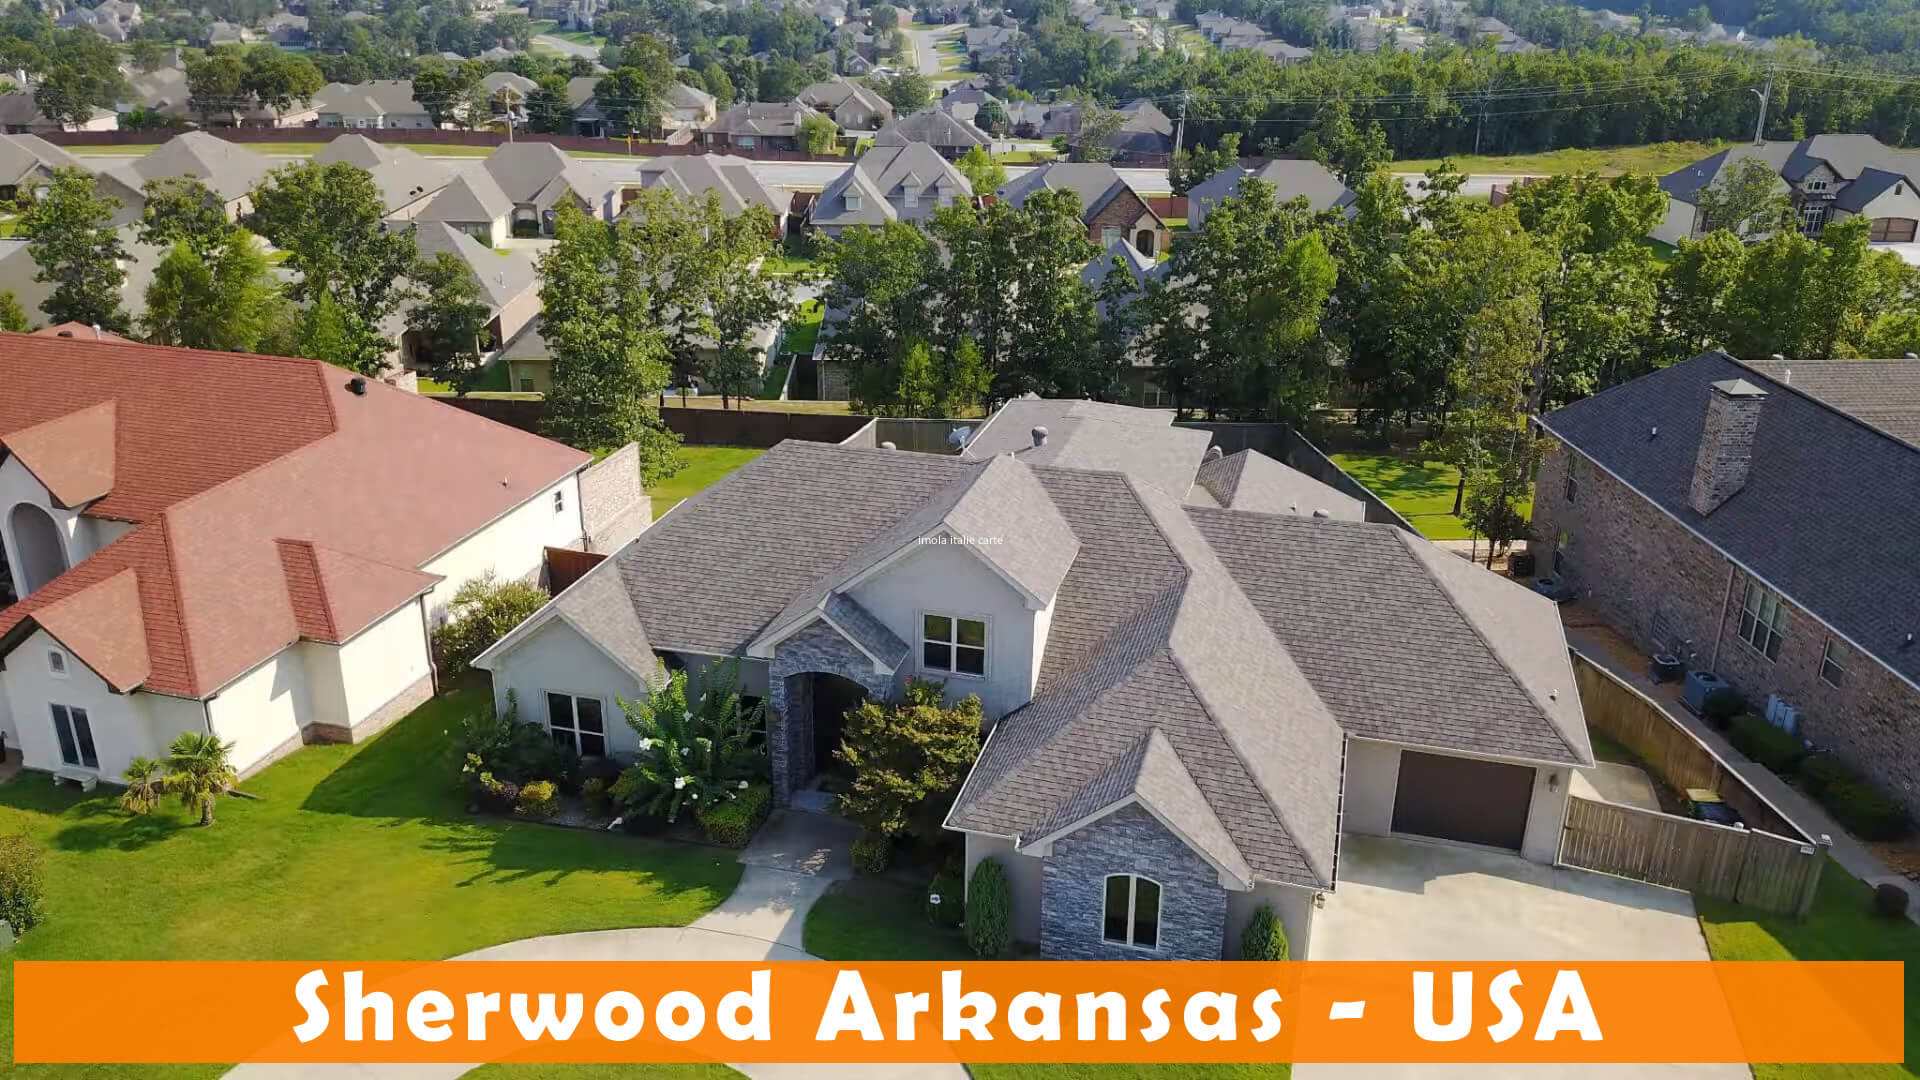 Sherwood Arkansas   USA